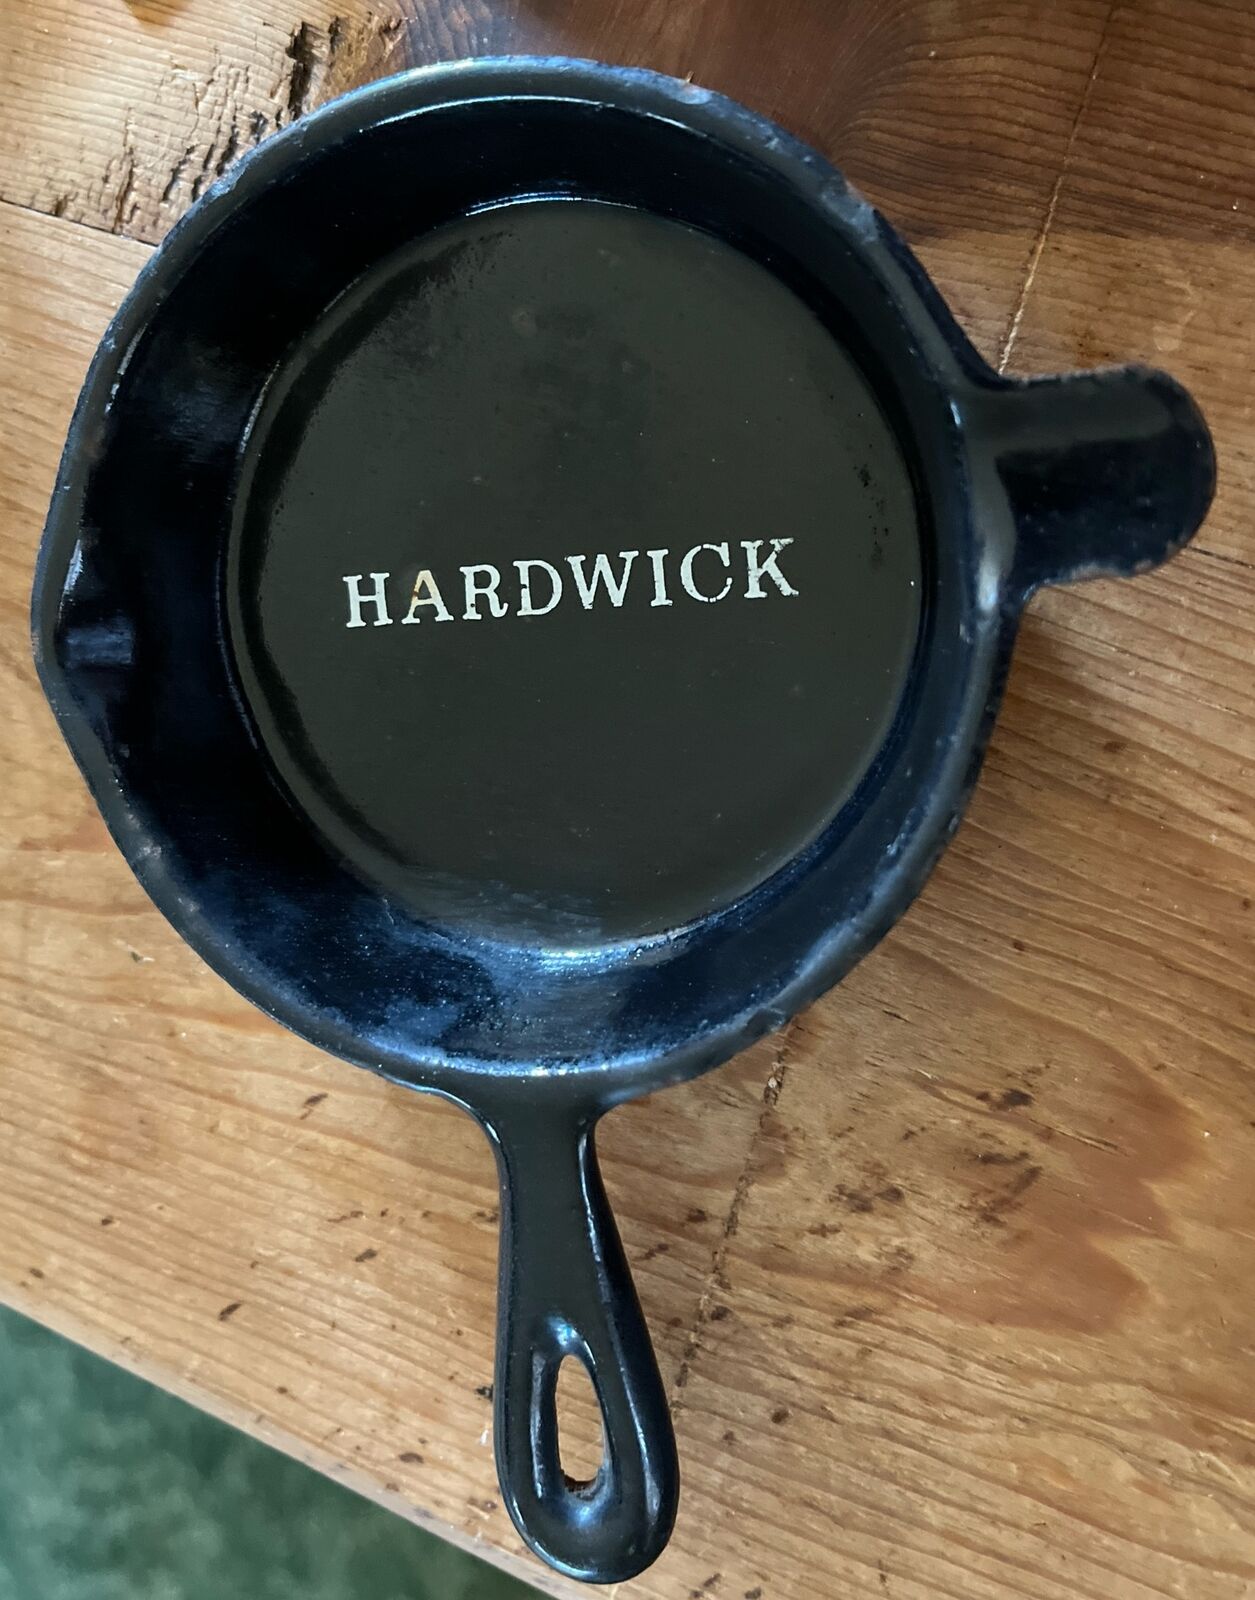 Hardwick Oven Company Advertising Enameled Cast Iron Ashtray Skillet